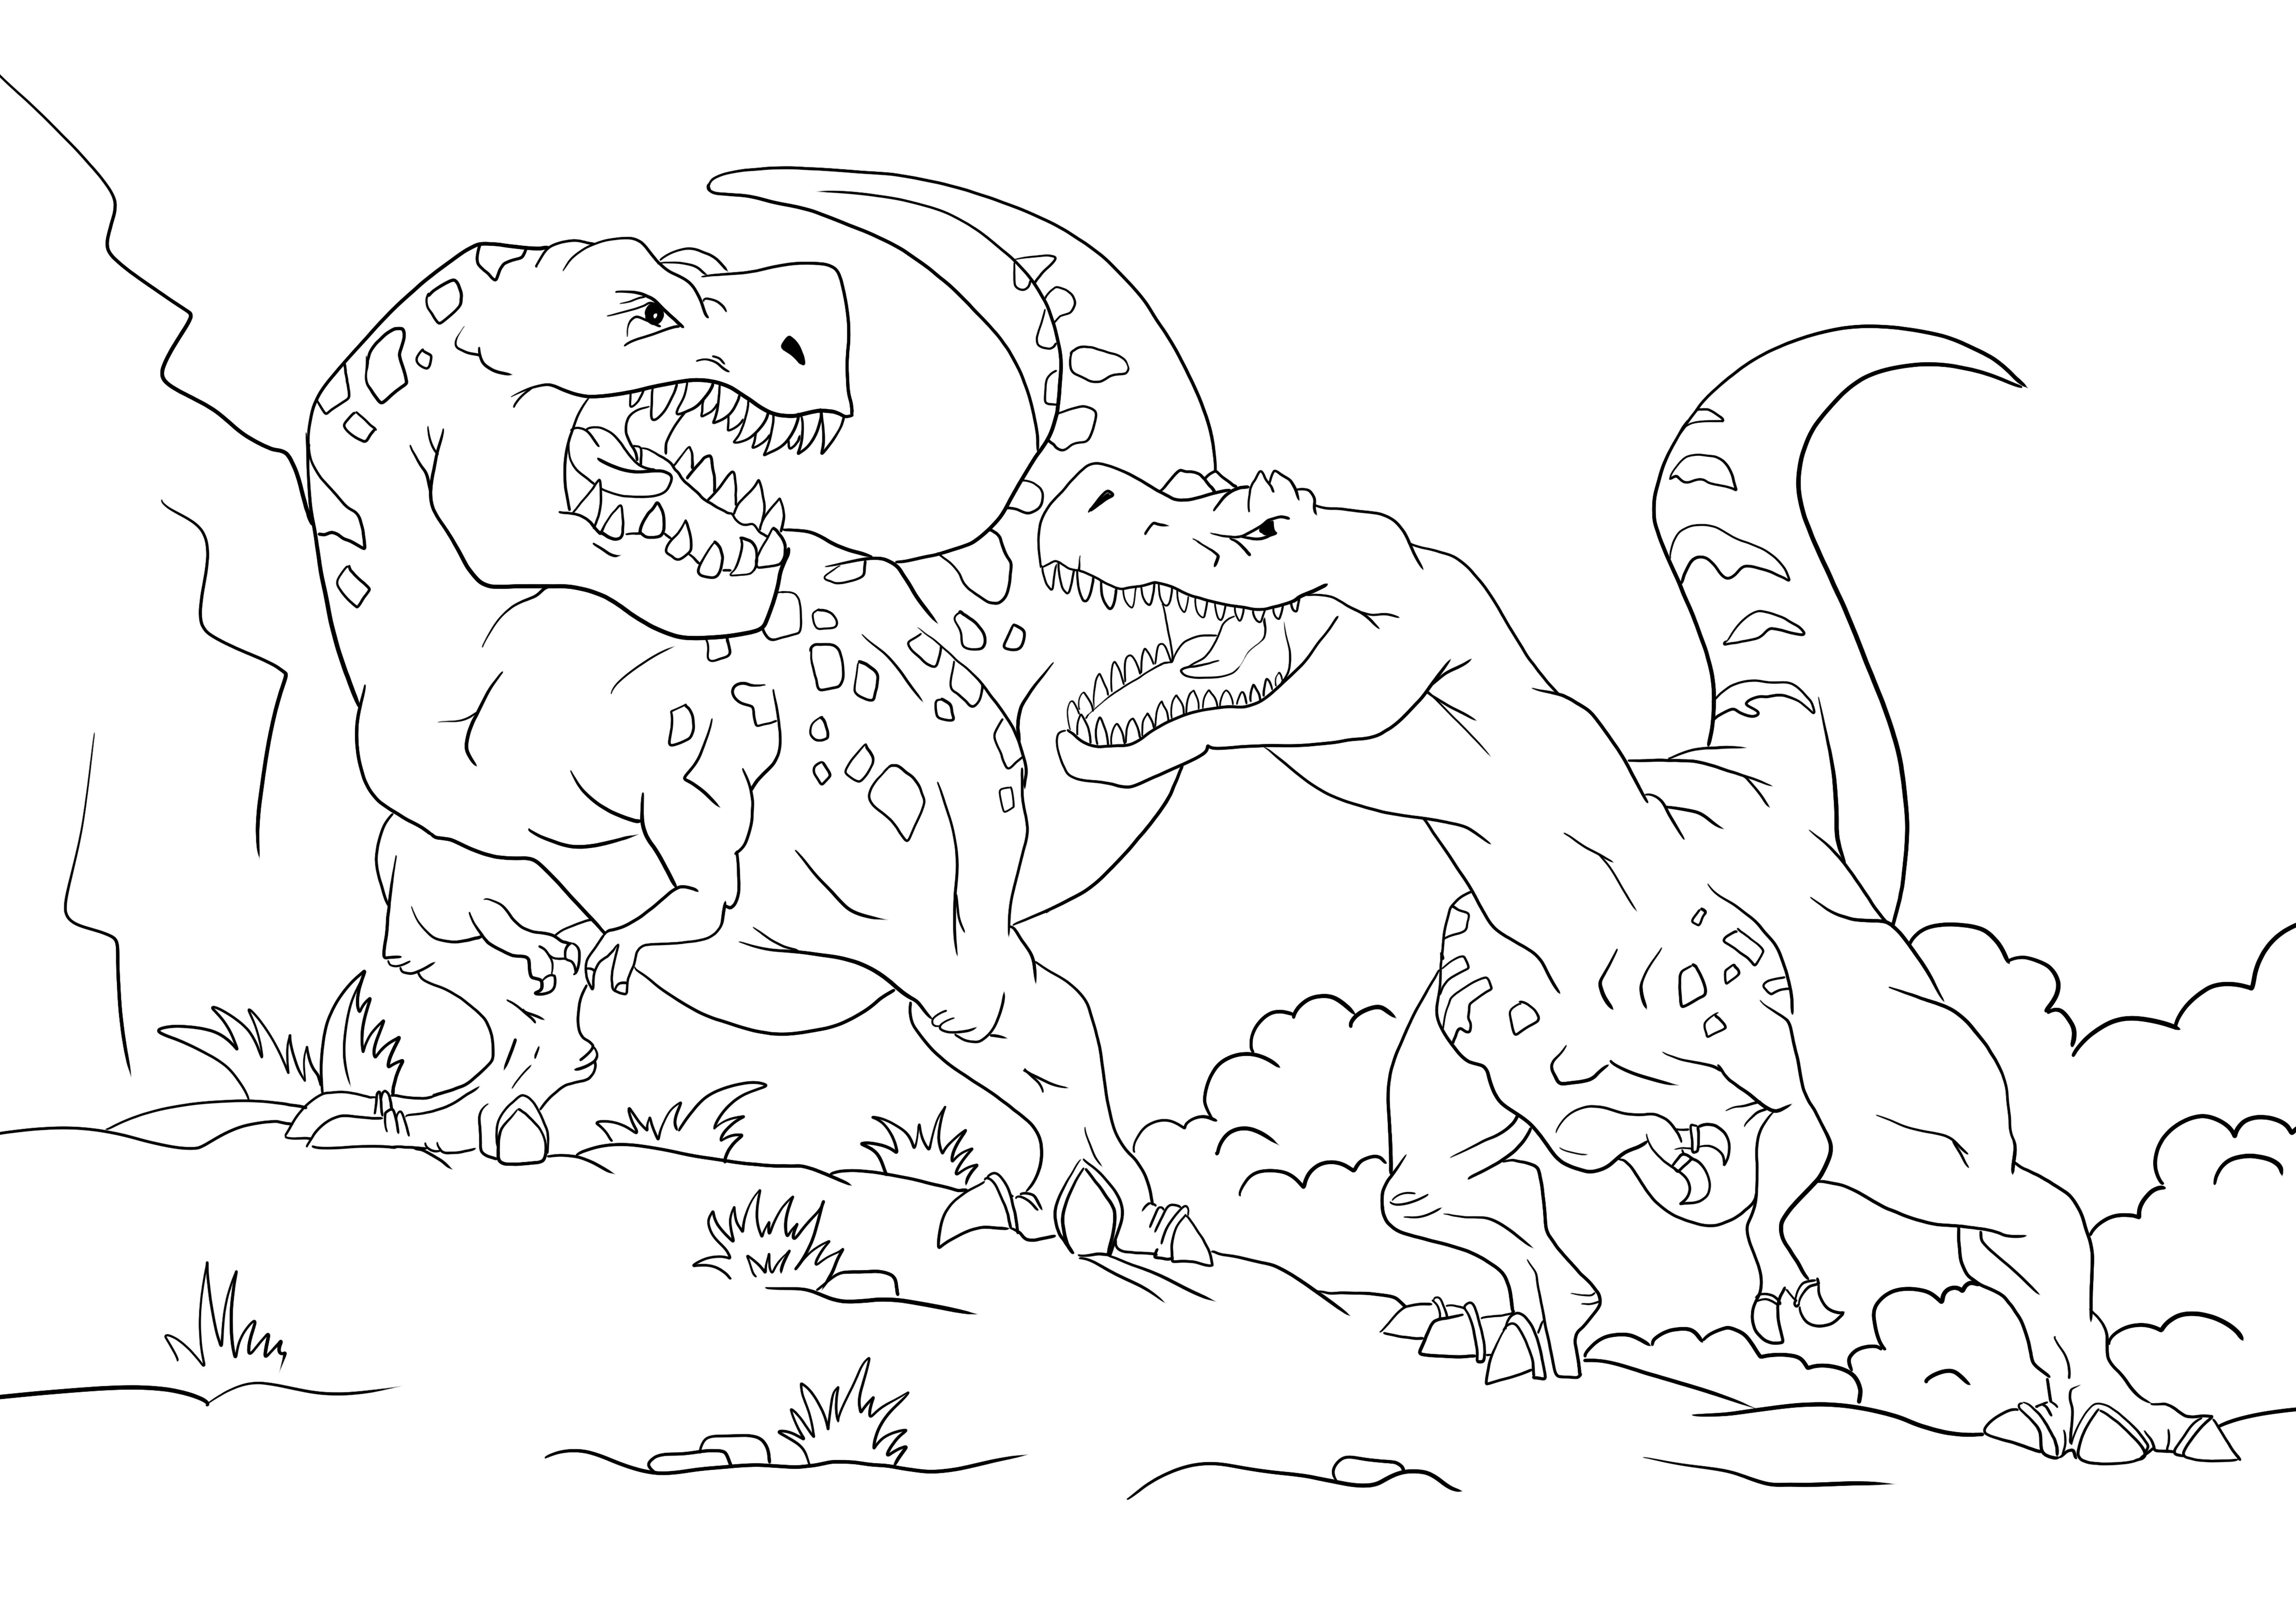 Tiranosaurio peleando imagen para imprimir gratis